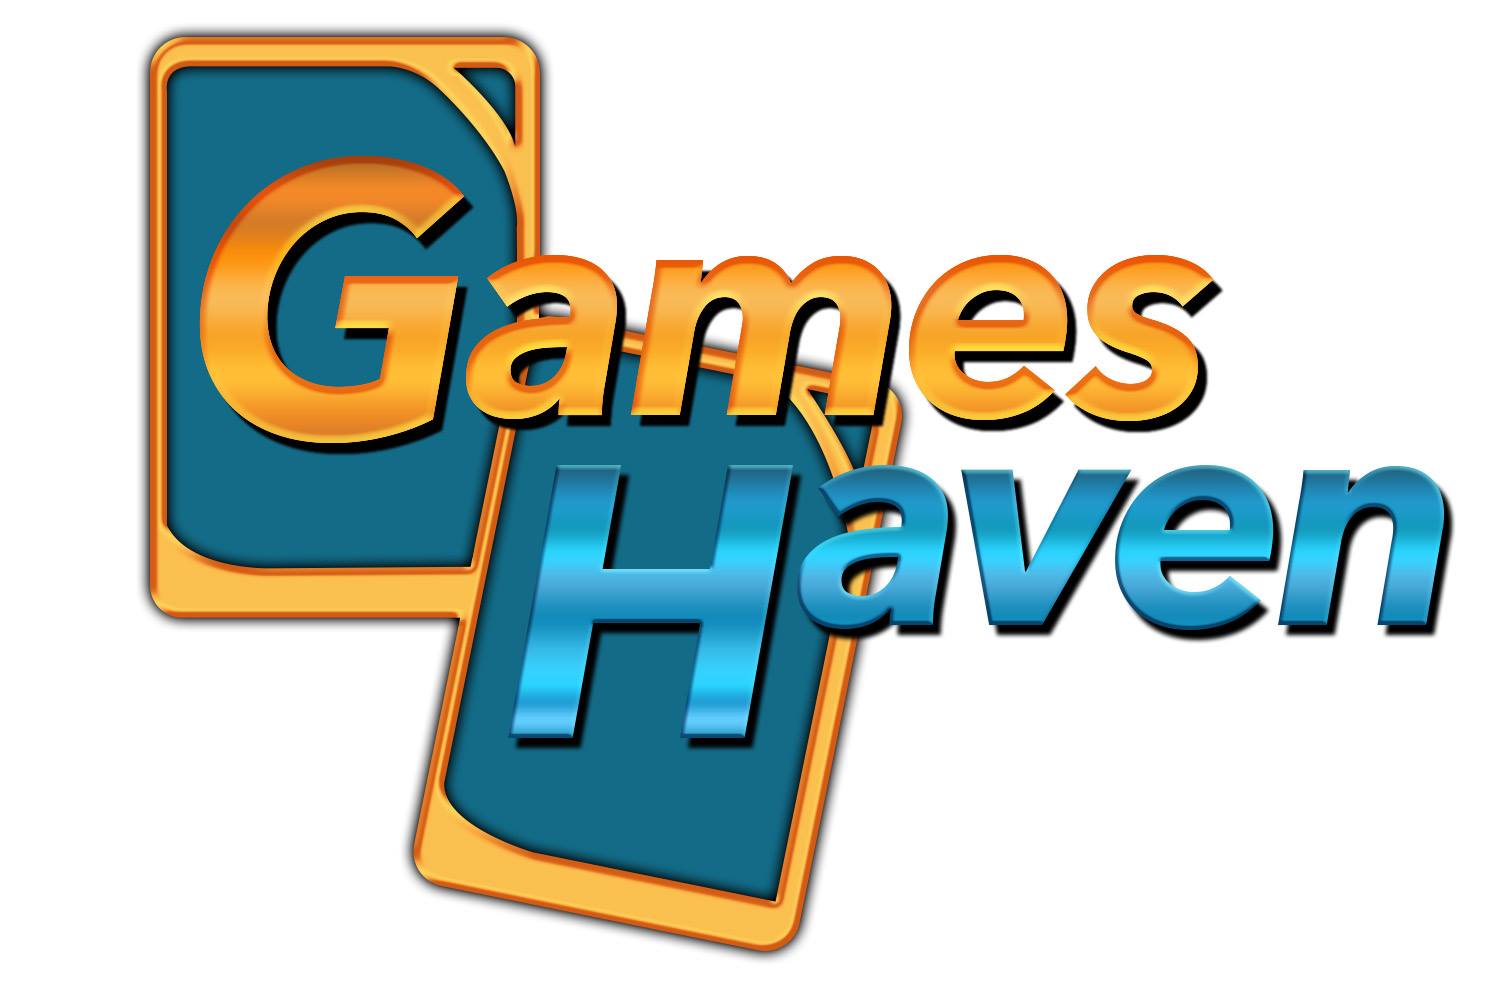 Games Haven Logo